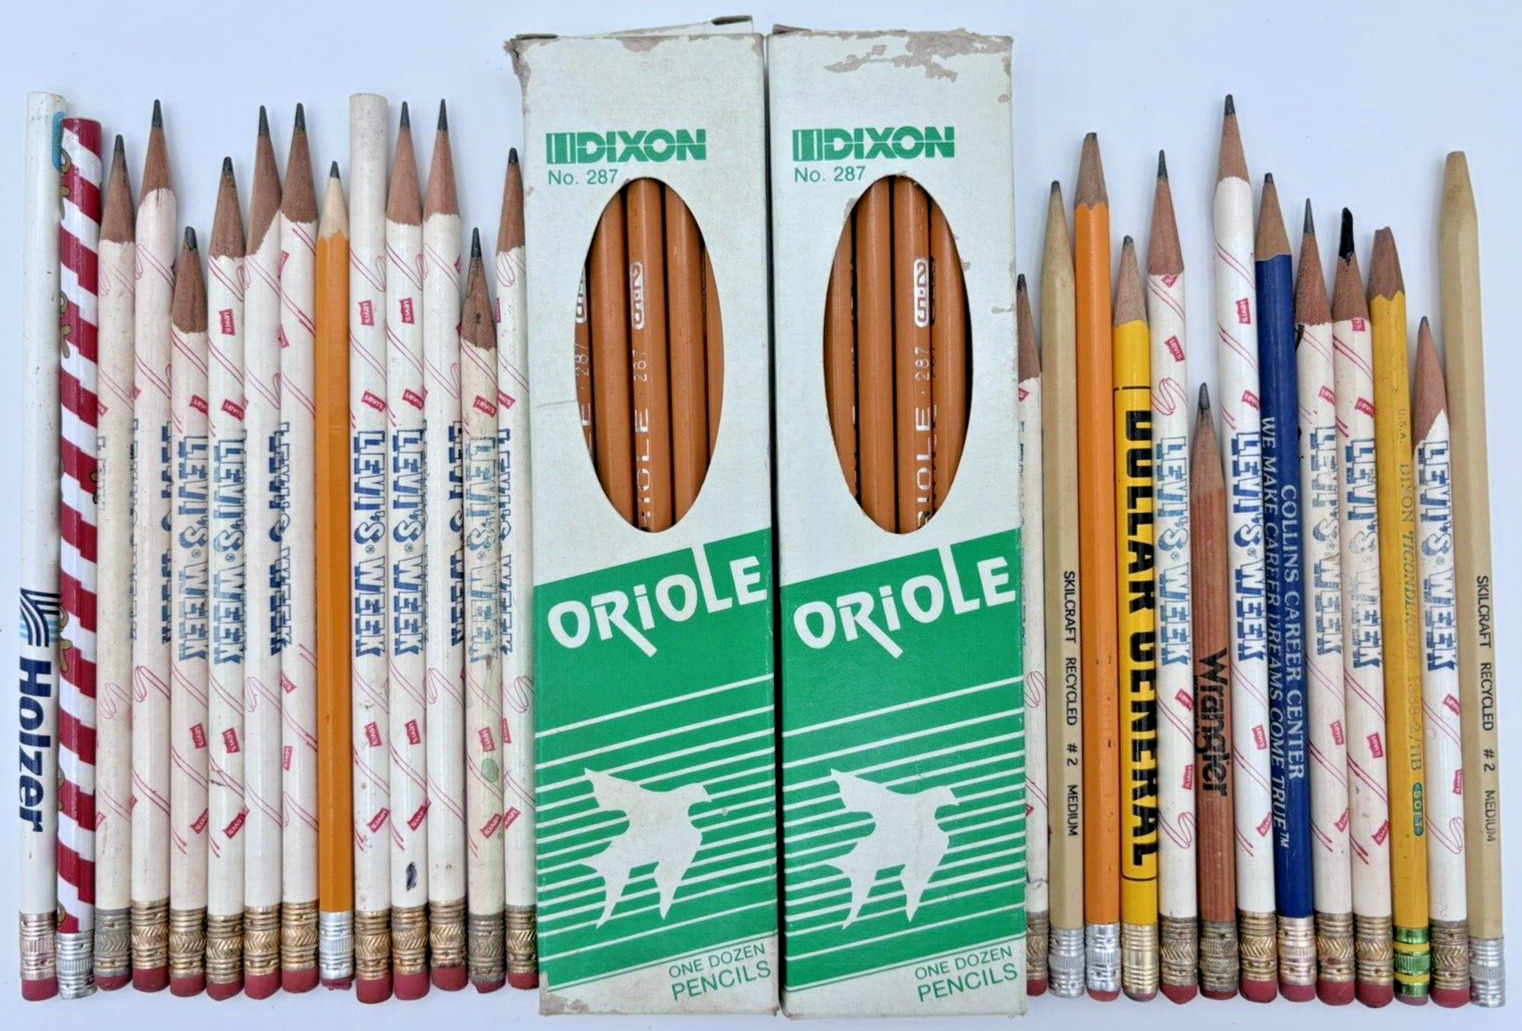 Lot of 50 Vintage Pencils With Dixon Oriole In Original Box Unused 287-2 USA 2HB